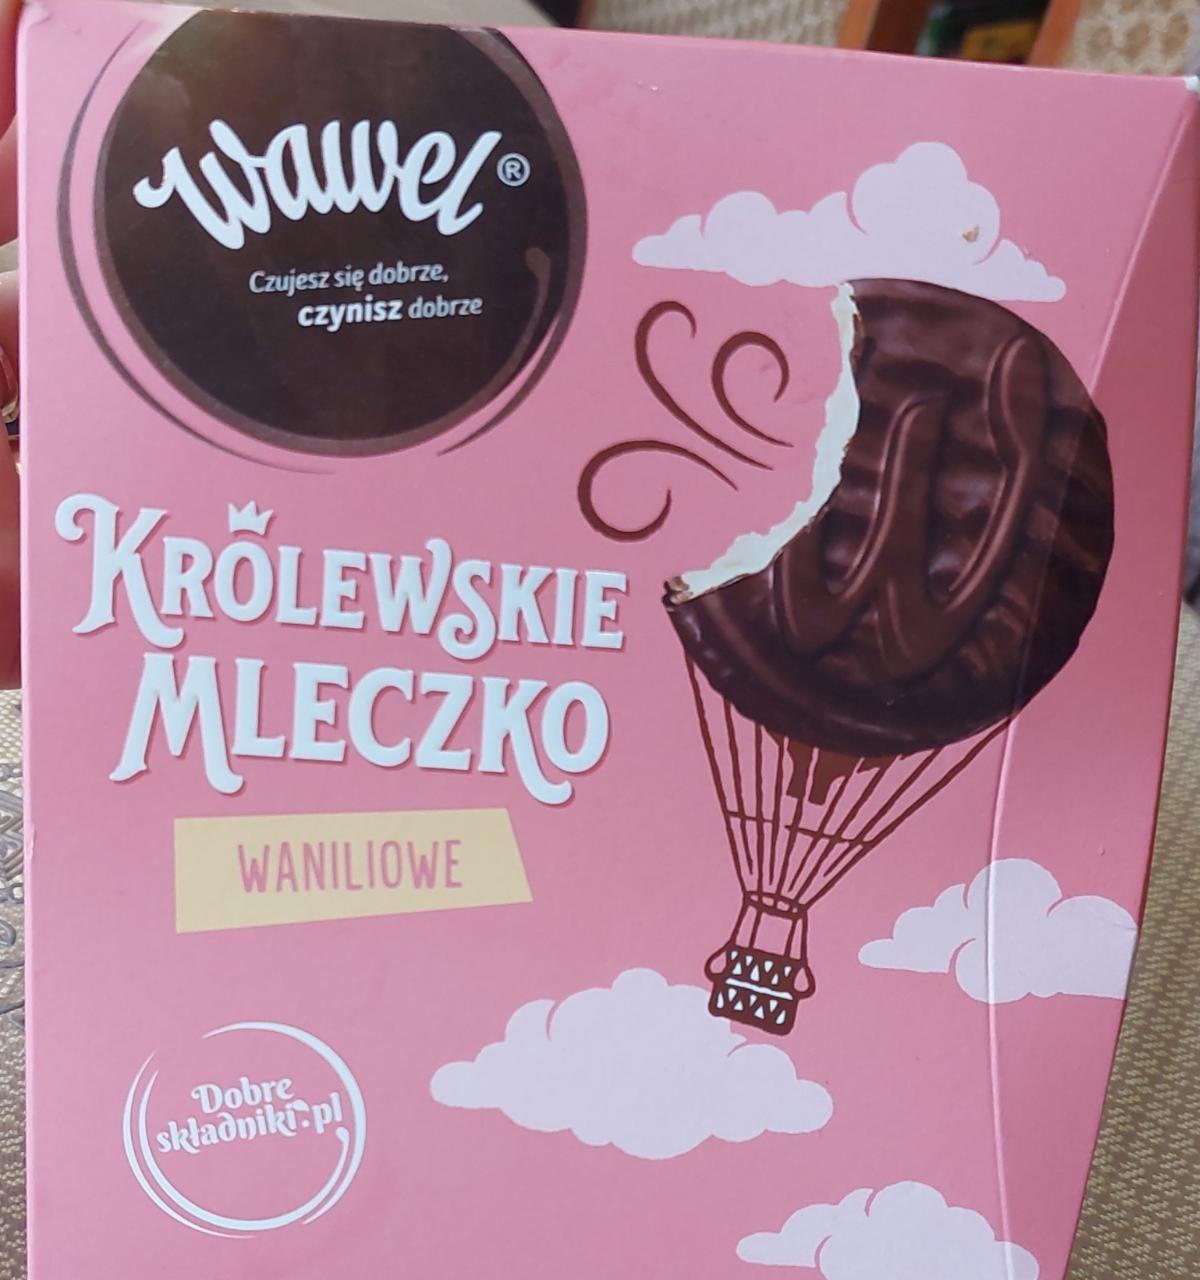 Фото - Молочко со вкусом ванили Королевское Królewskie Wawel